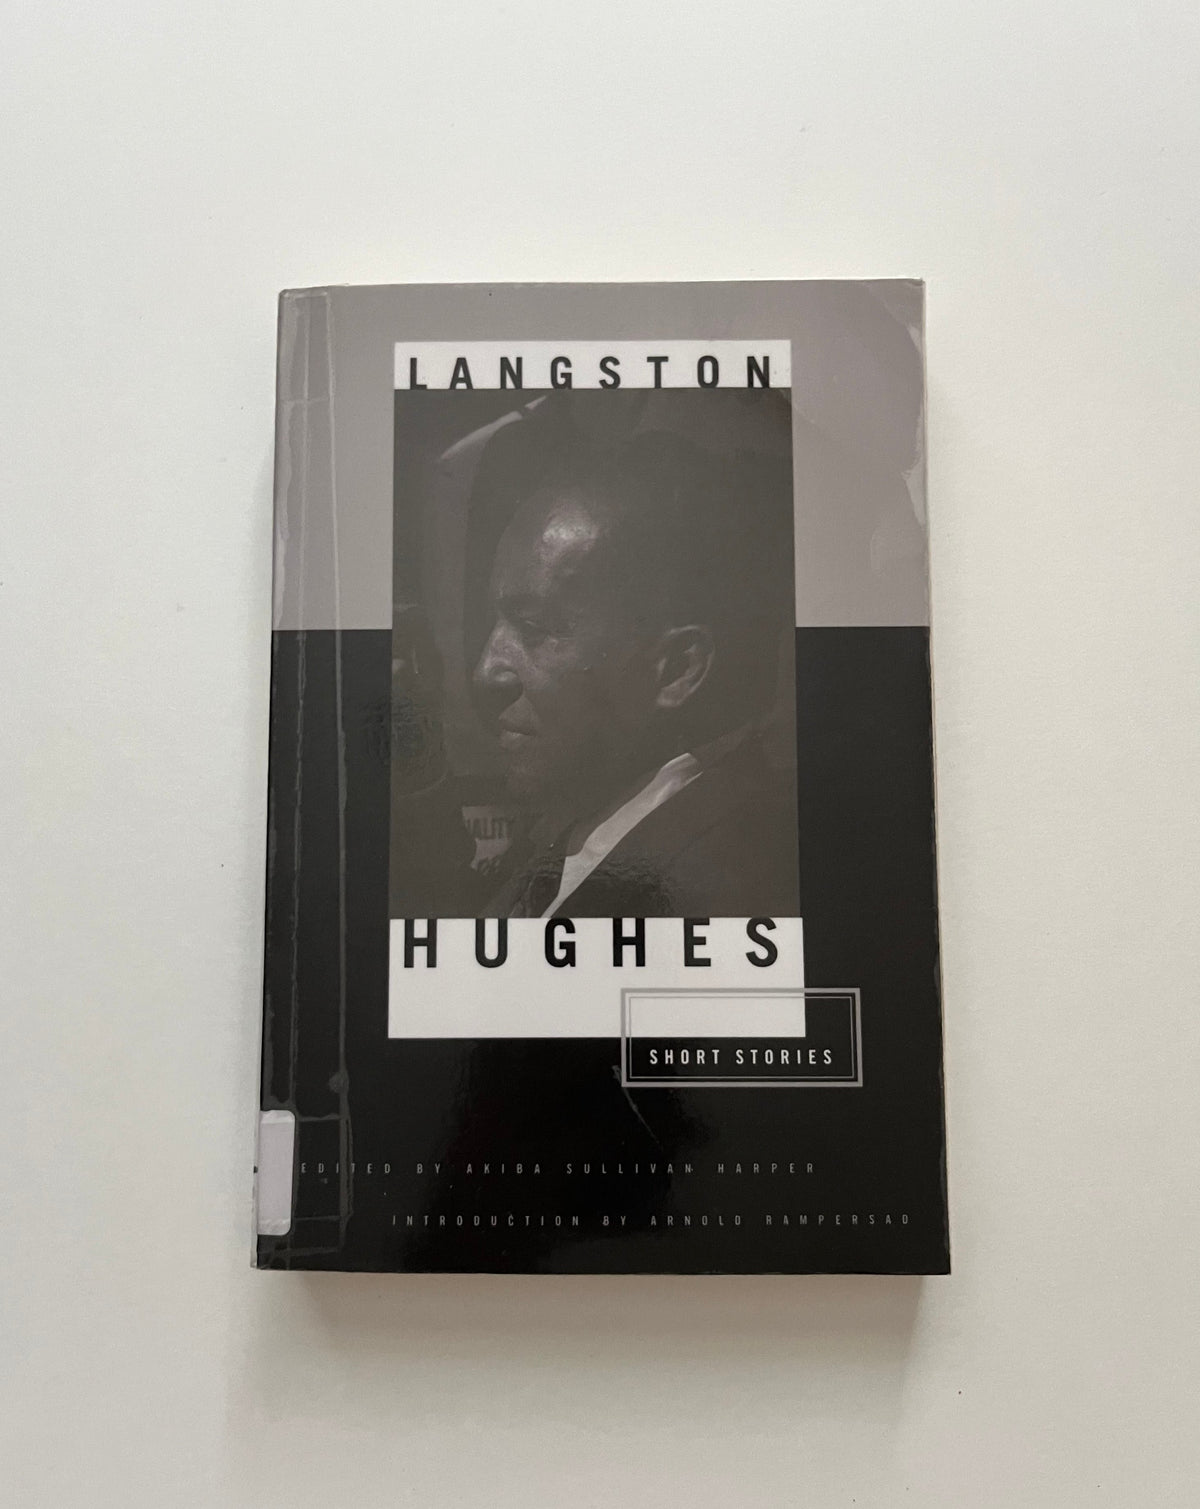 Short Stories by Langston Hughes